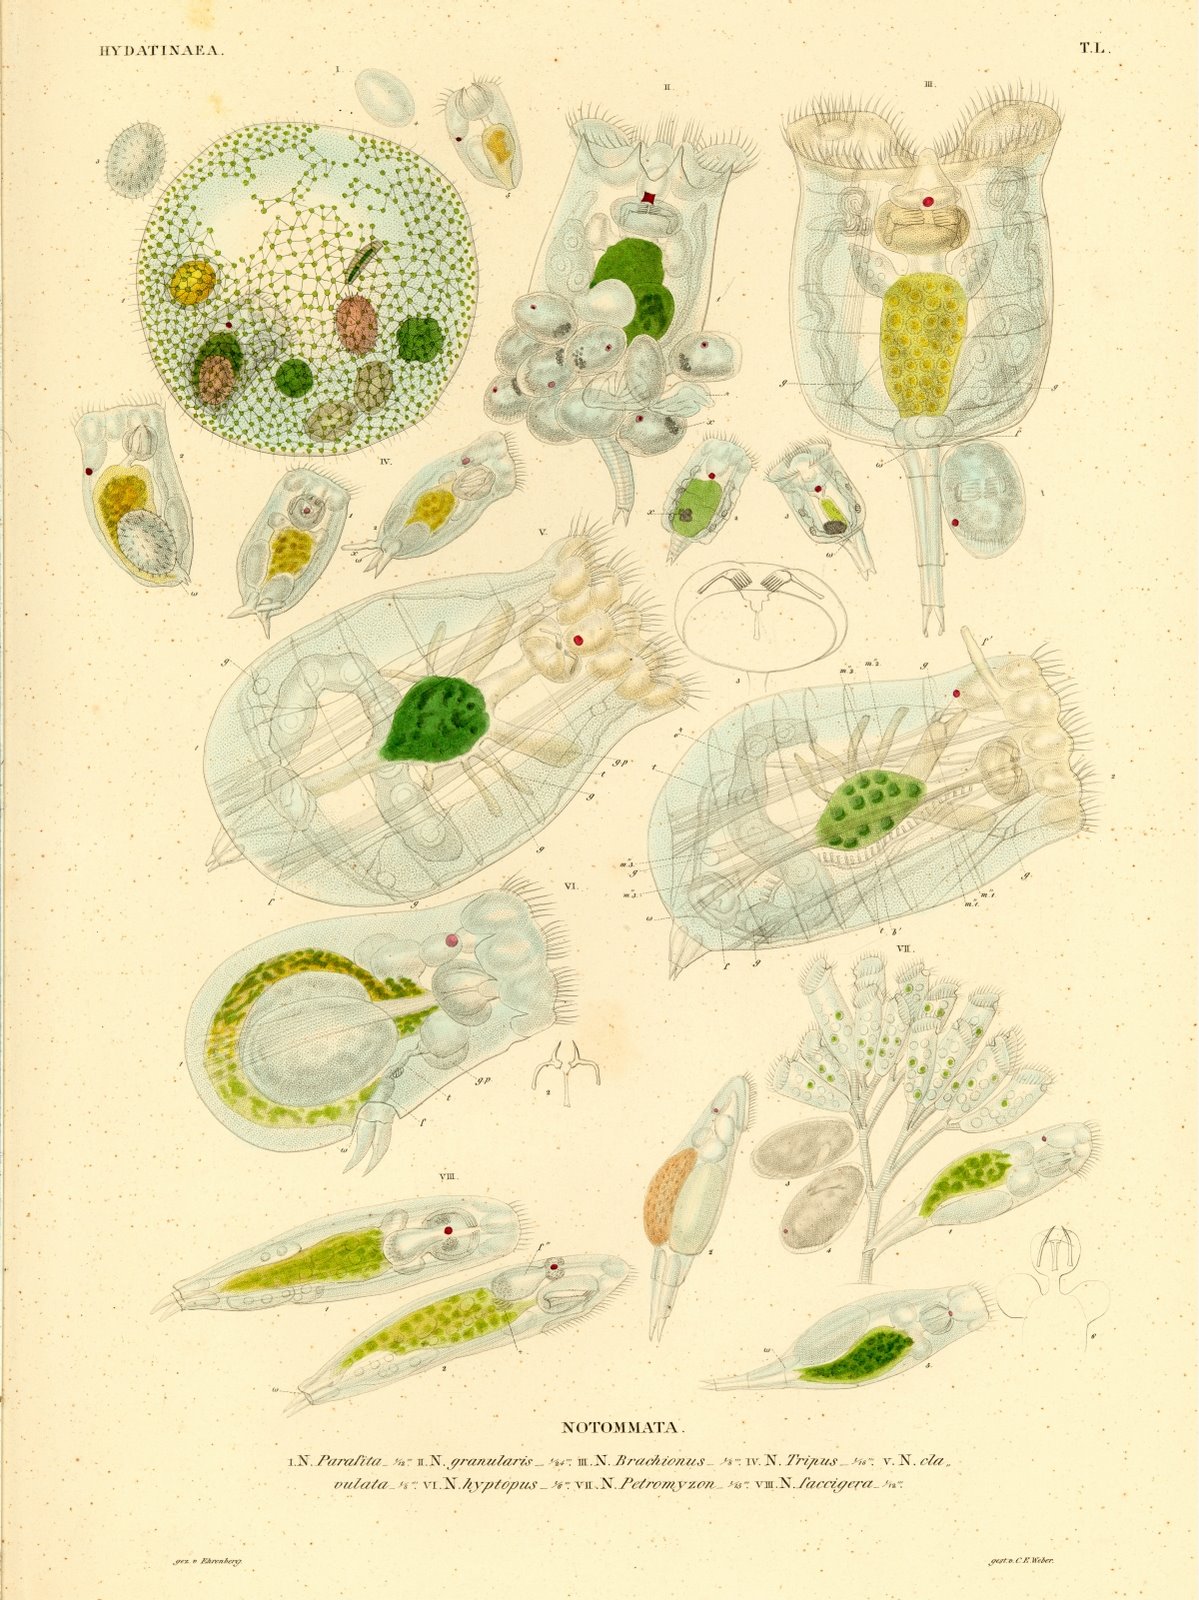 [Hydatinaea,+Notommata+-+parasita,+granularis,+brachionus,+tripus,+clavulata+...jpg]